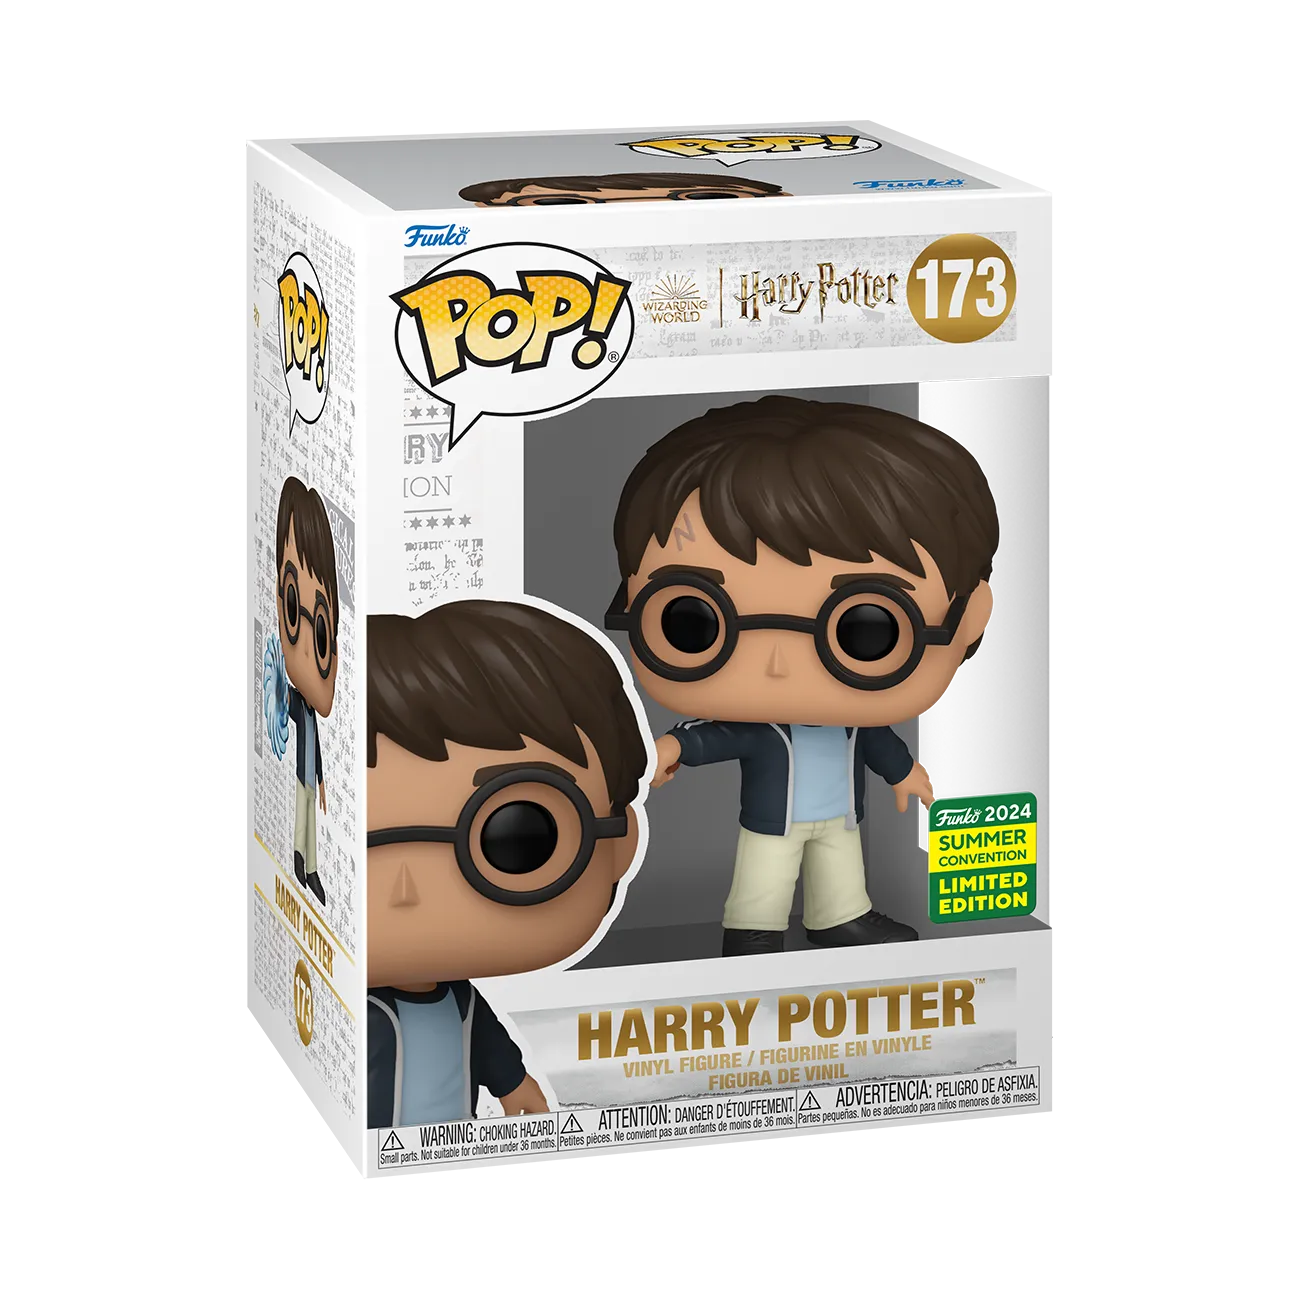 Harry Potter and the Prisoner of Azkaban - Harry Potter Pop! Vinyl (2024 Summer Convention Exclusive)